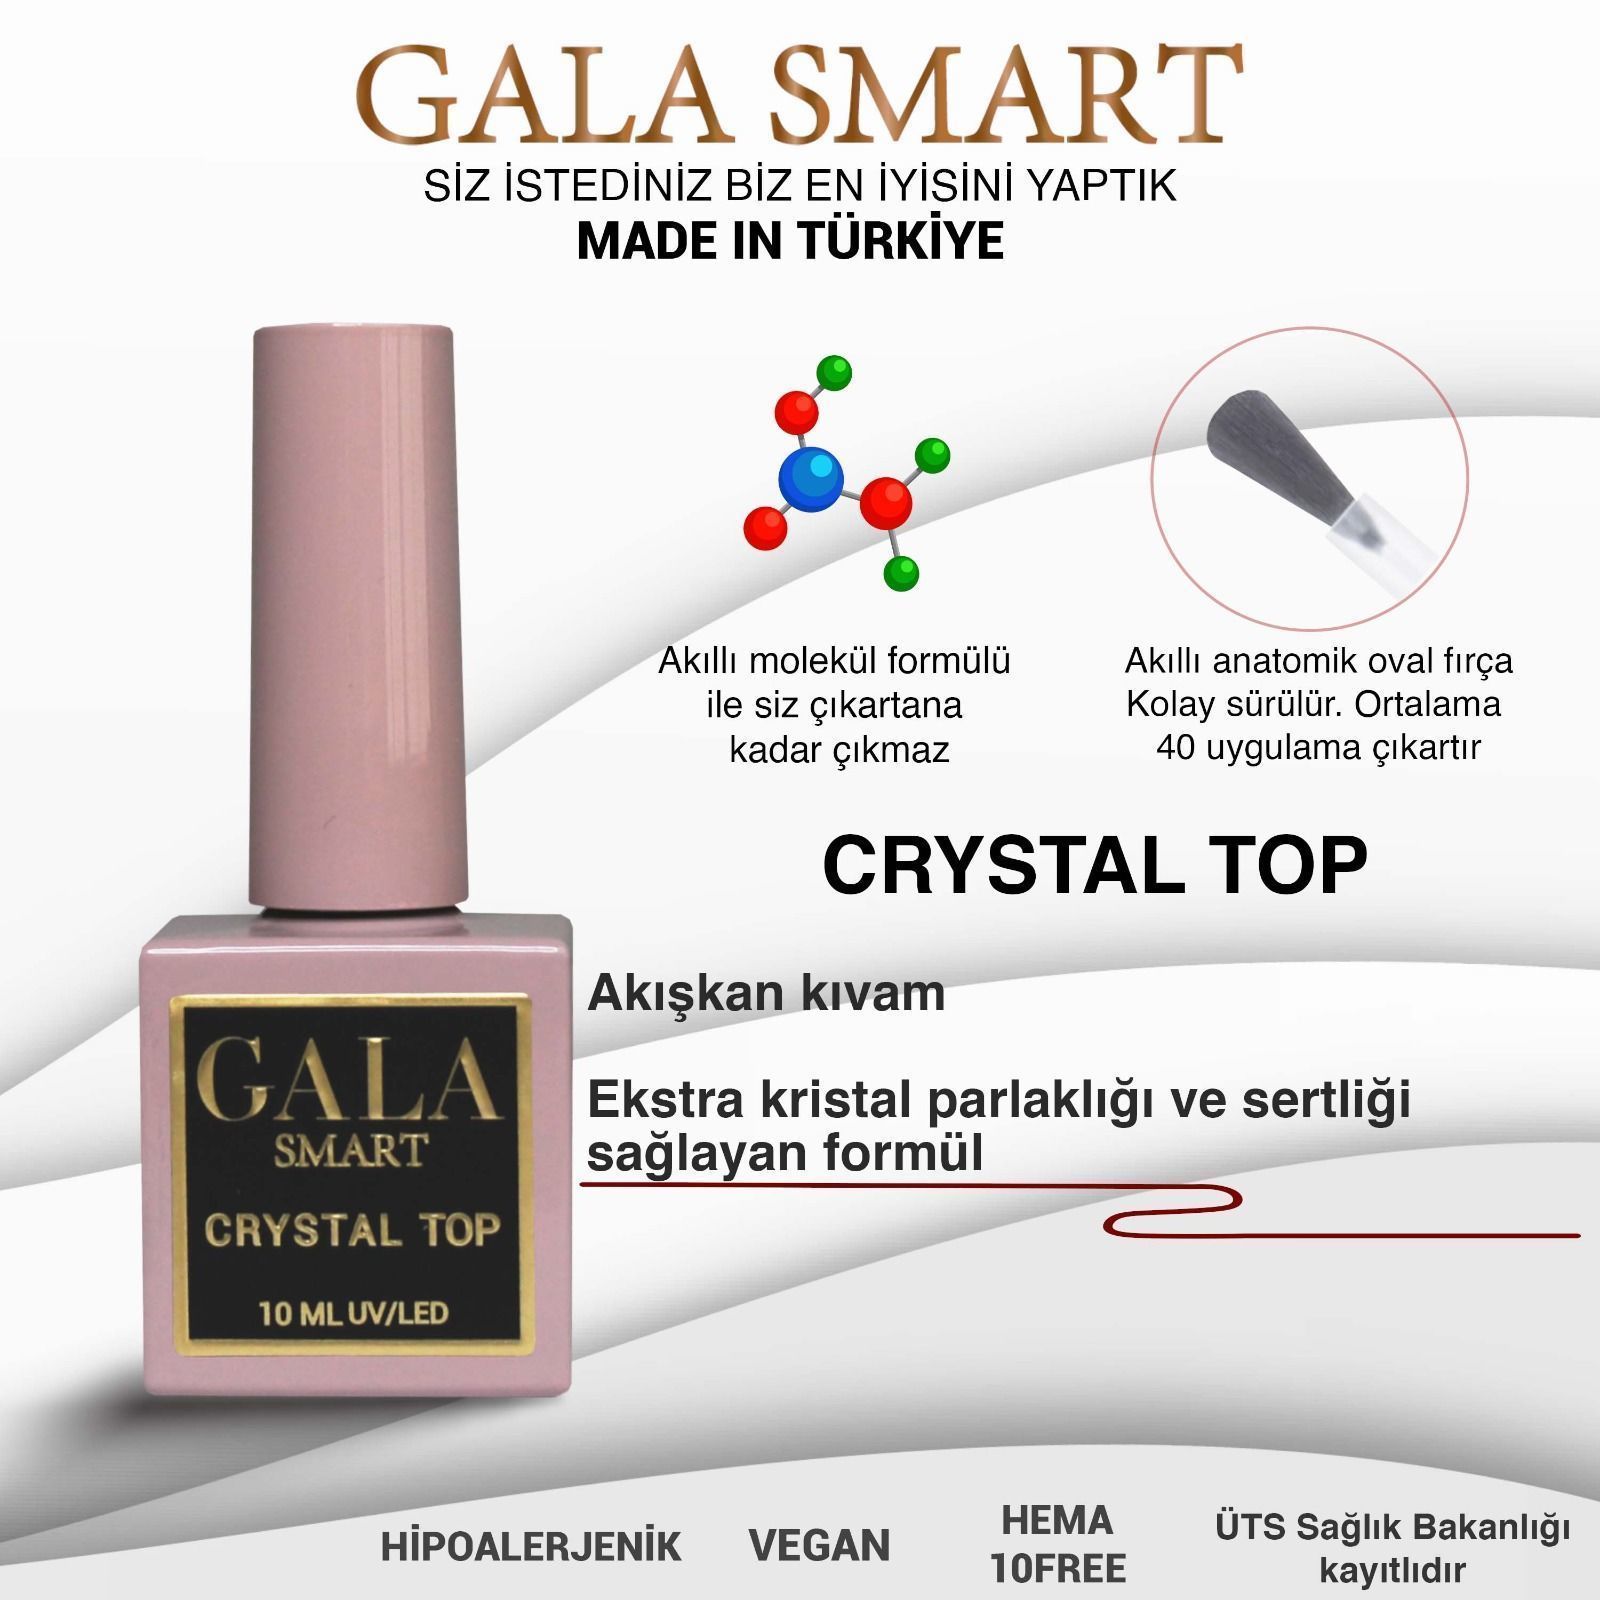 GALA SMART CRYSTAL TOP 10 mle